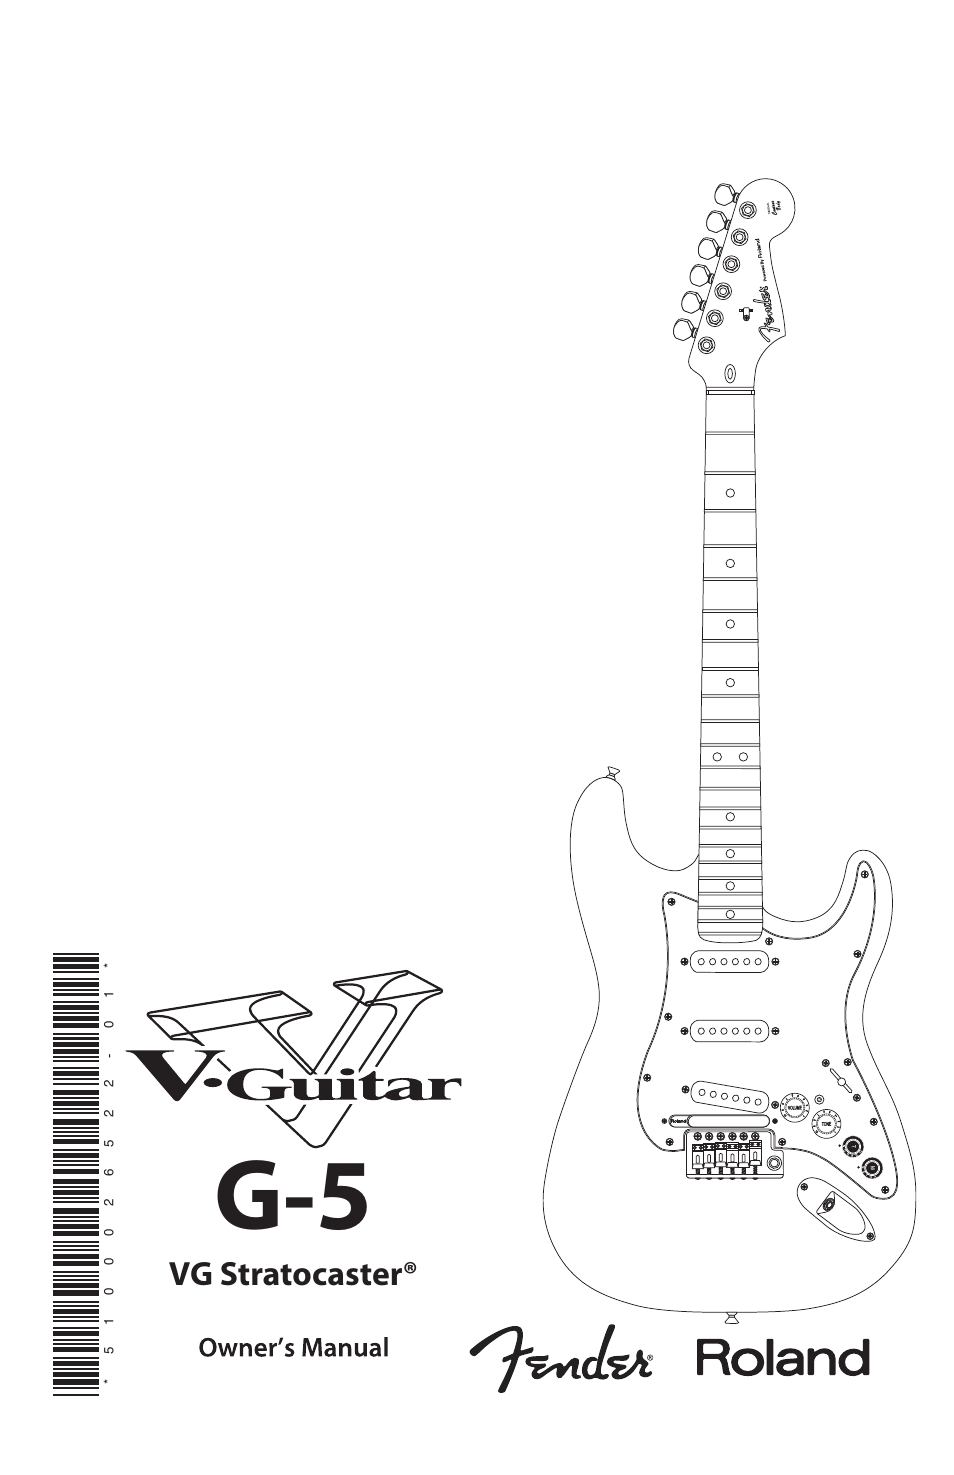 Fender Roland G-5 VG Stratocaster User Manual | 18 pages